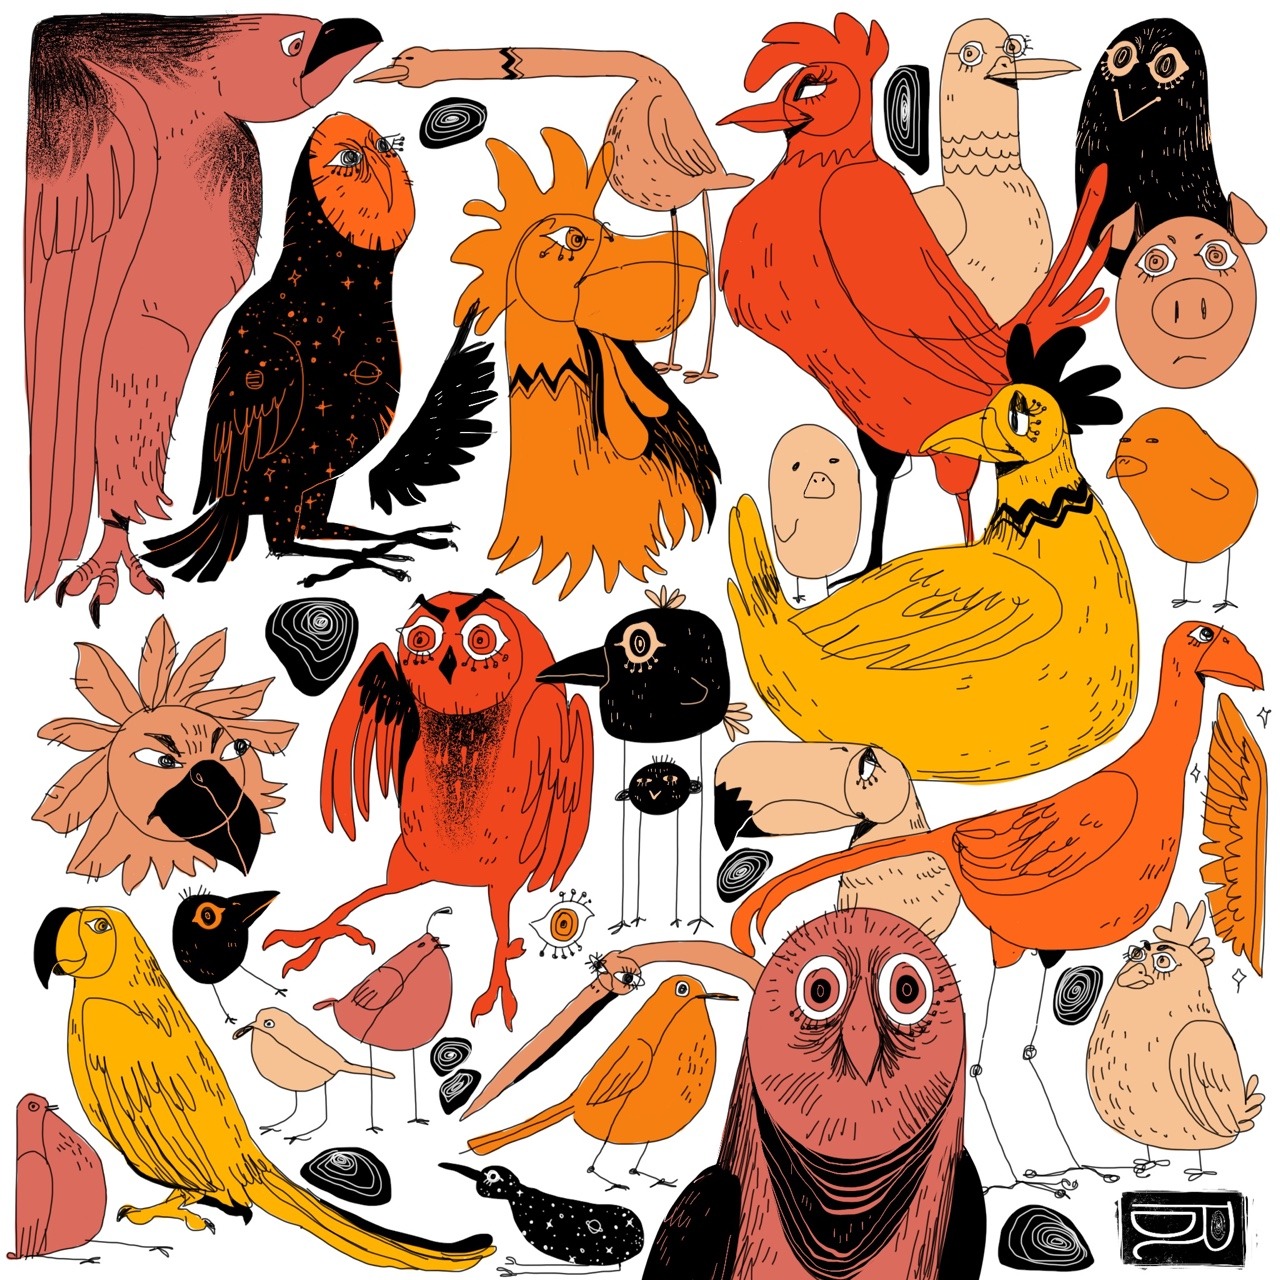 Sketchbook: various birds and one pig